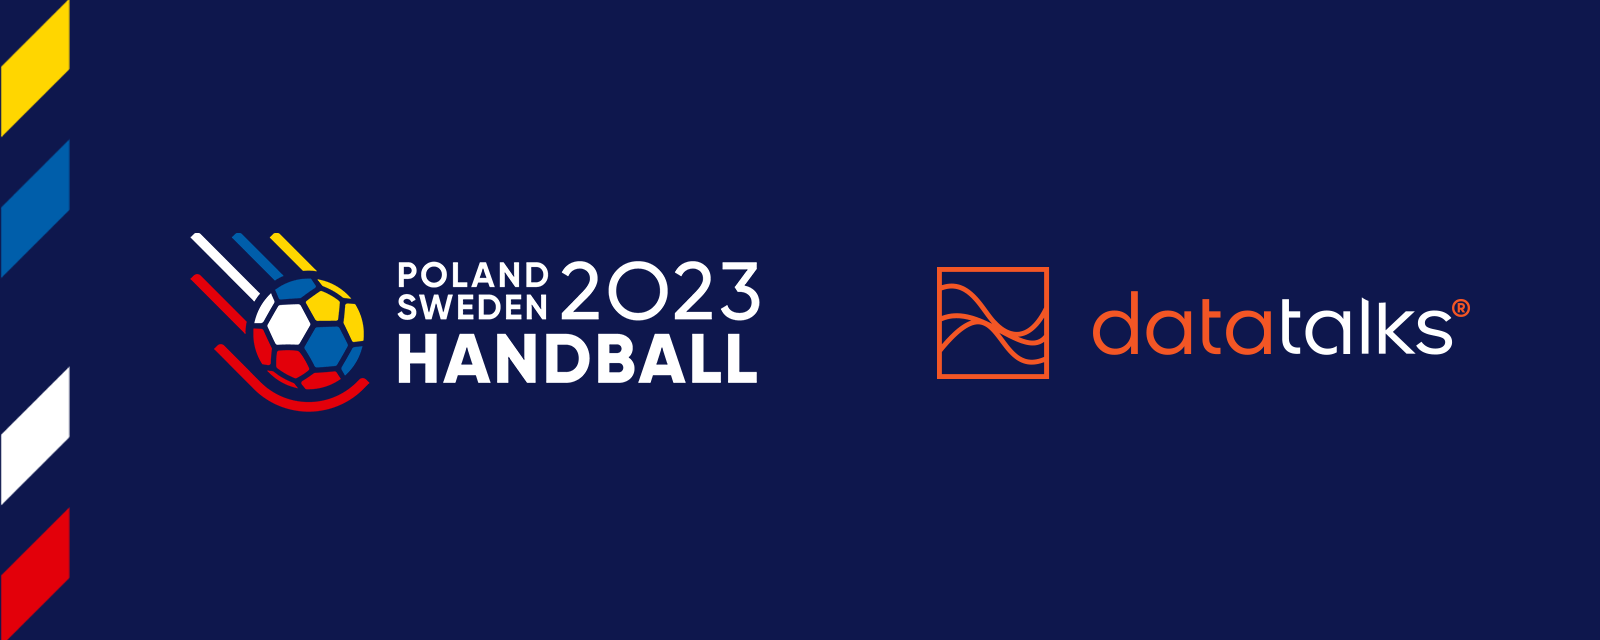 Poland Handball WC 2023 logo and Data talk logo on a blue background